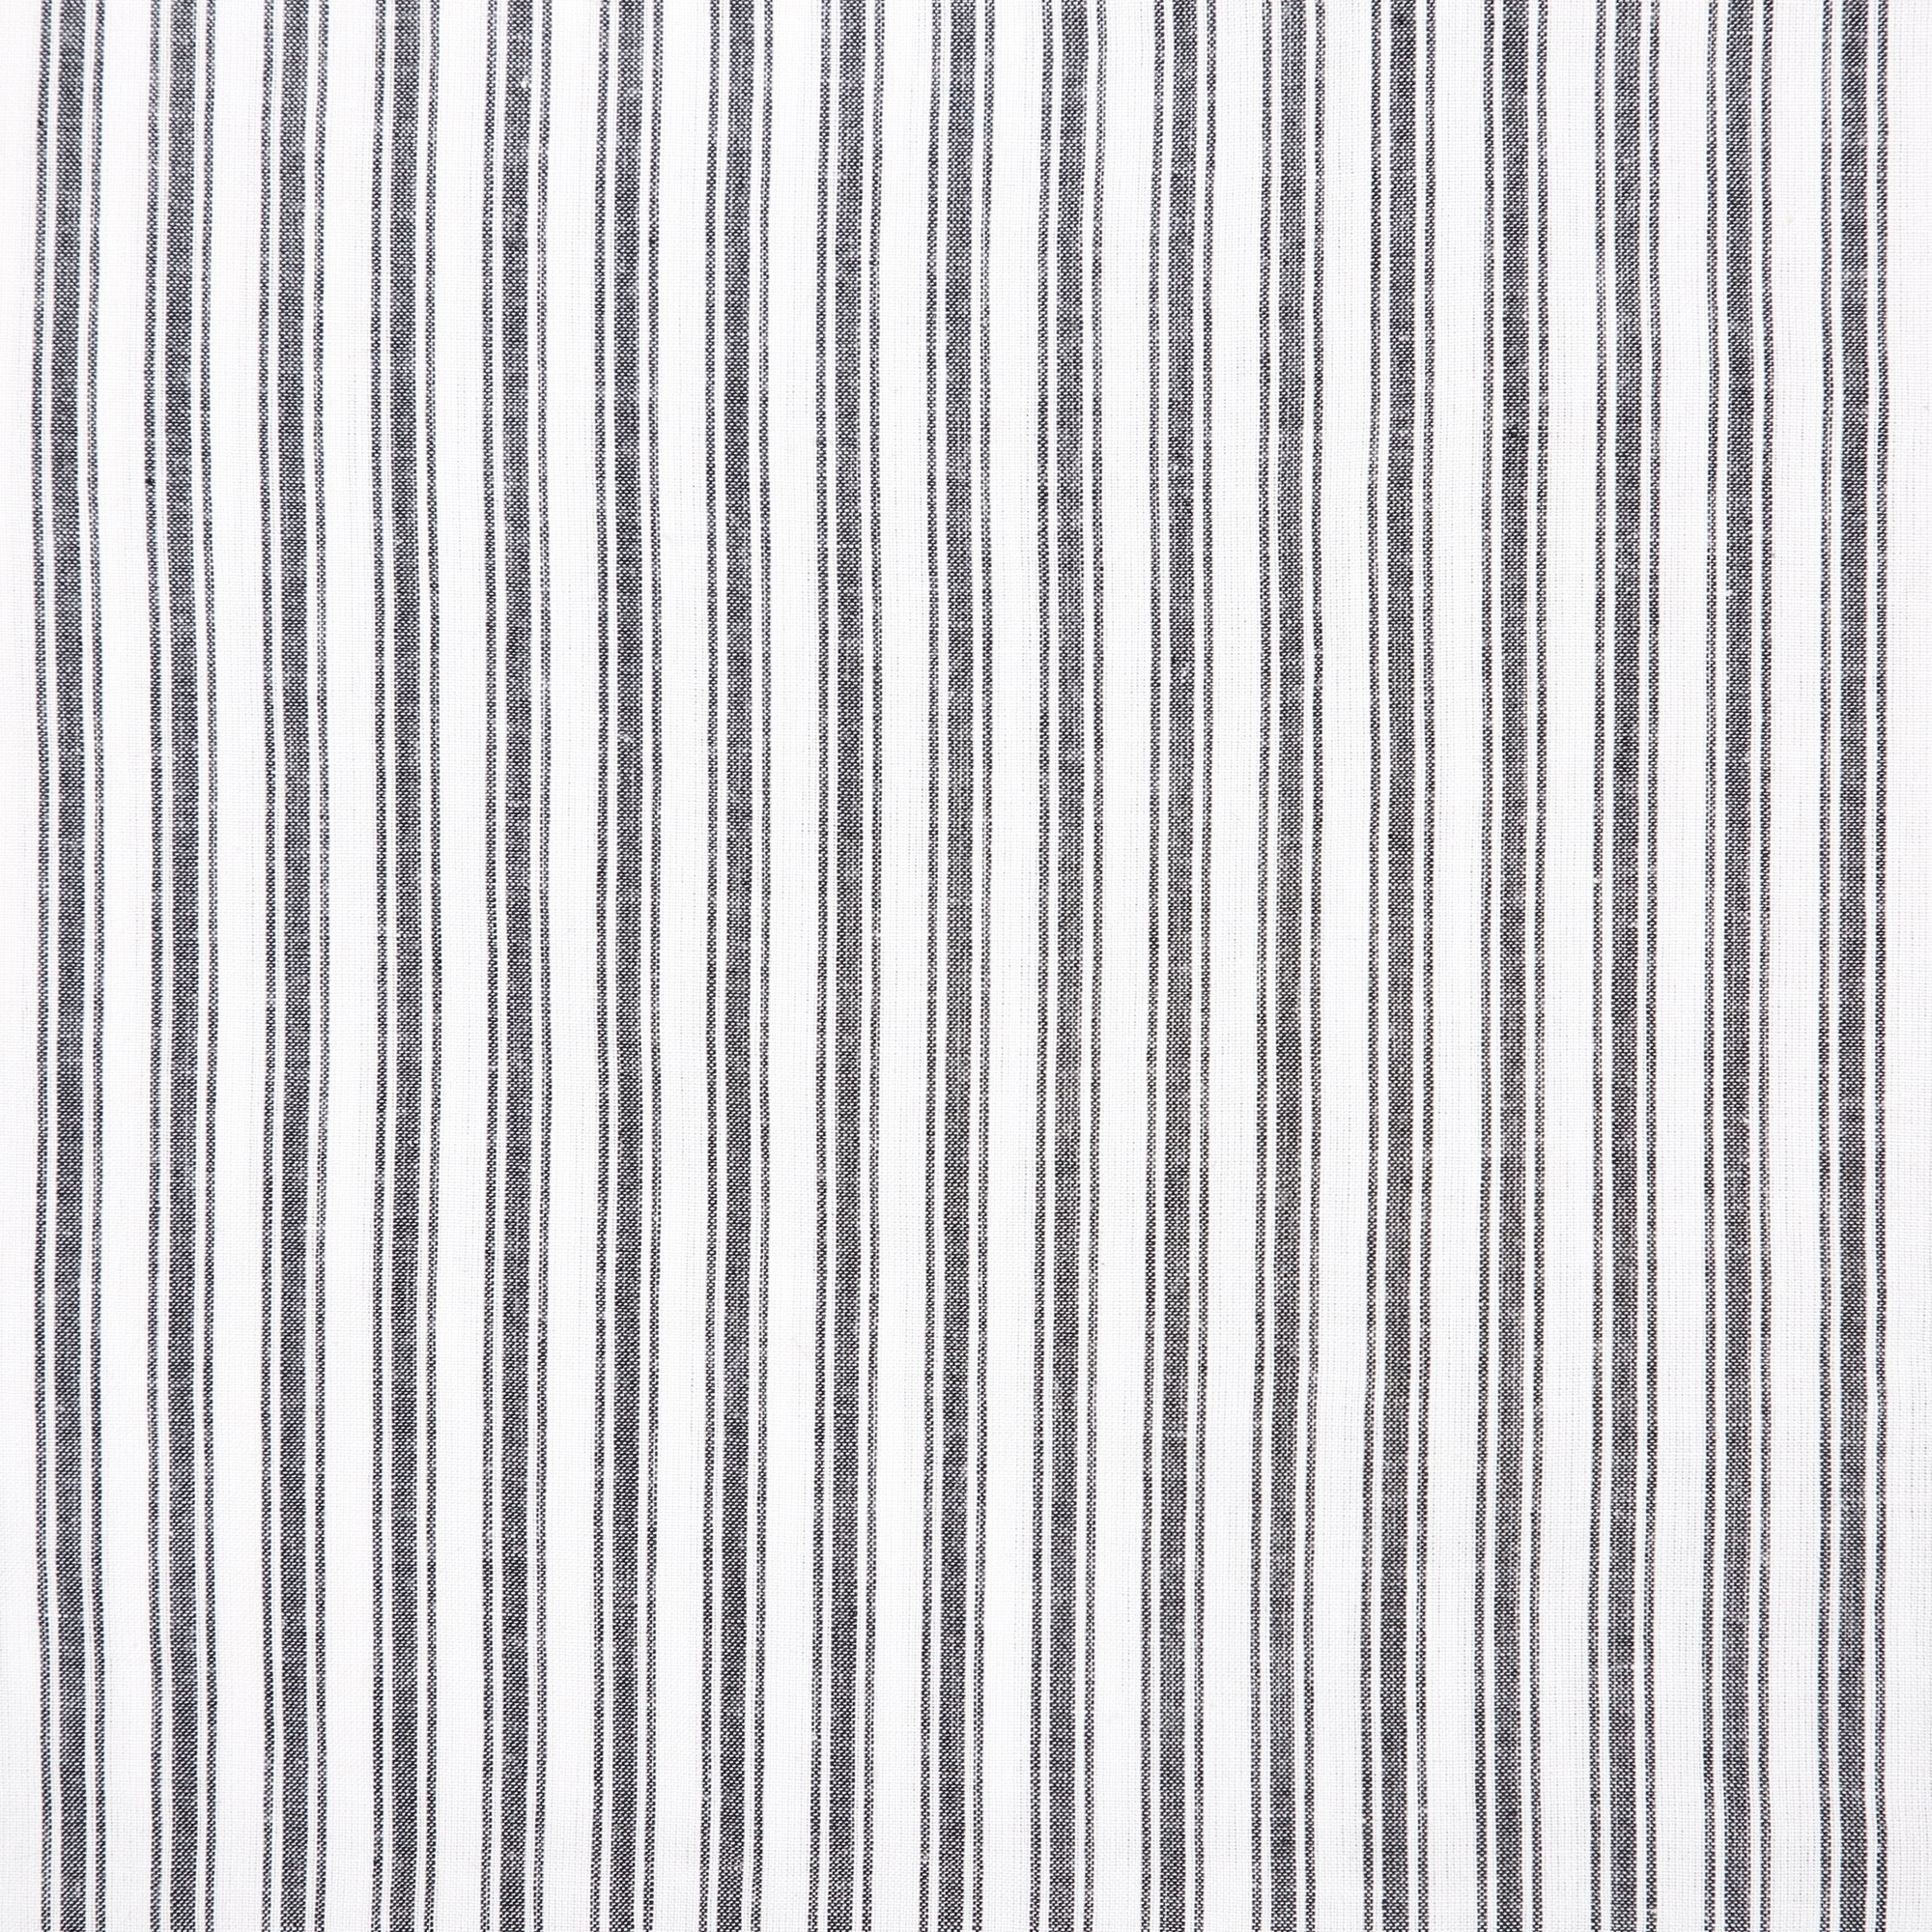 Sawyer Mill Black Ticking Stripe King Bed Skirt 78x80x16 VHC Brands